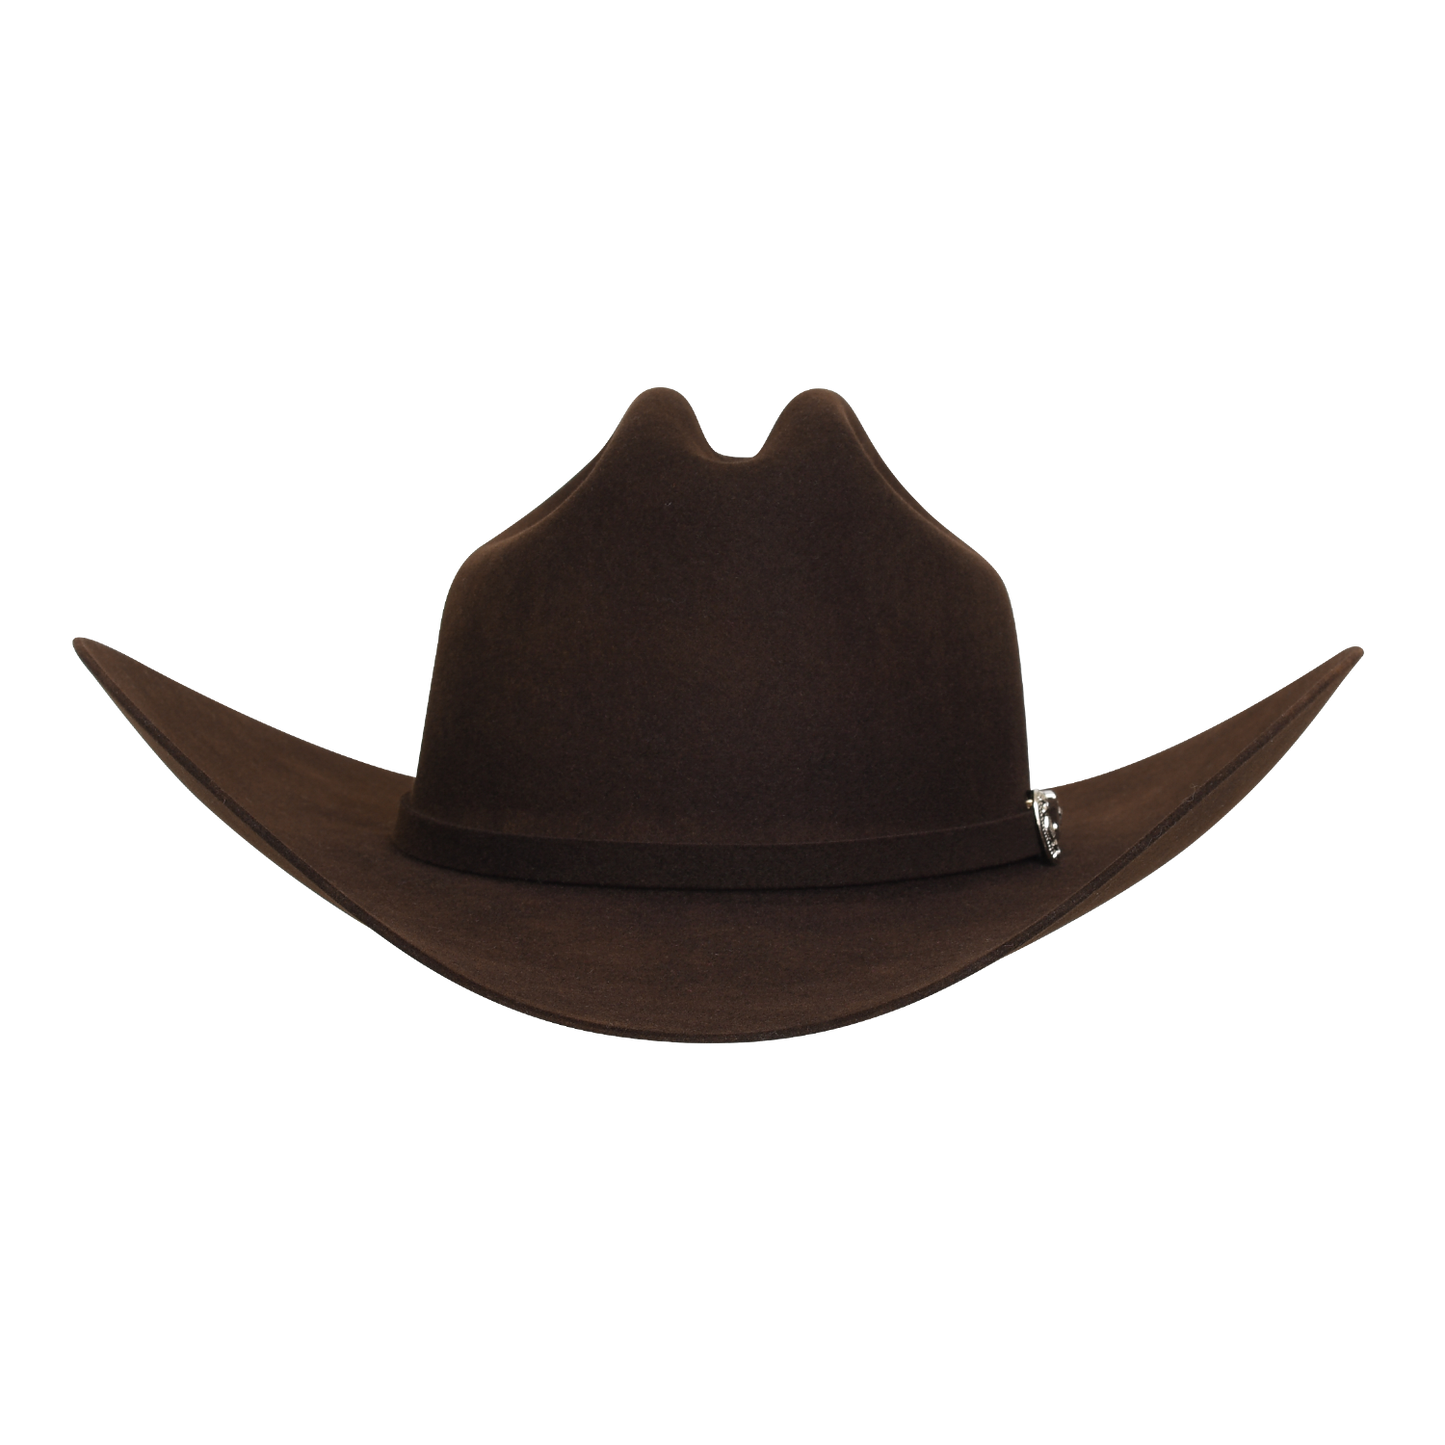 Twinstone Cowboy Hat 6X Cattleman Chocolate B-4" Rancher